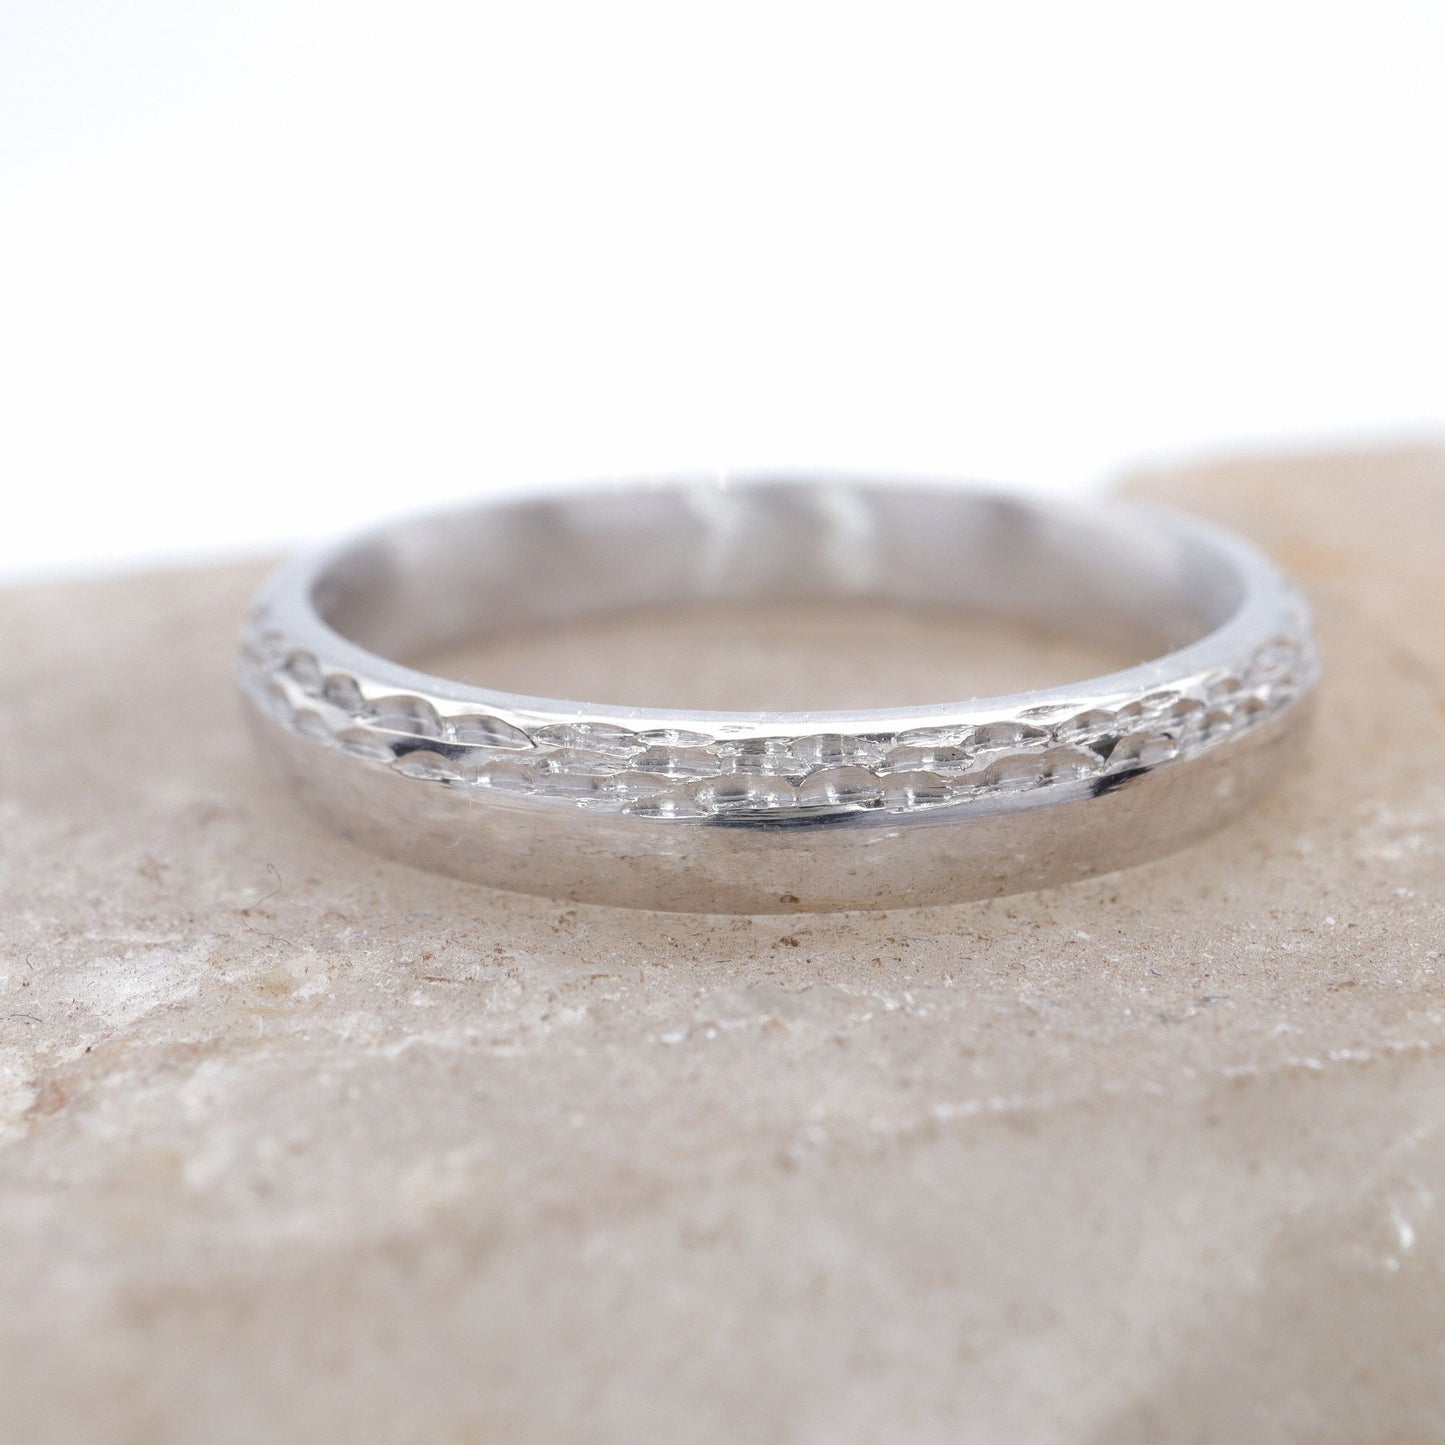 White gold thin wedding ring, Ullswater designer band.